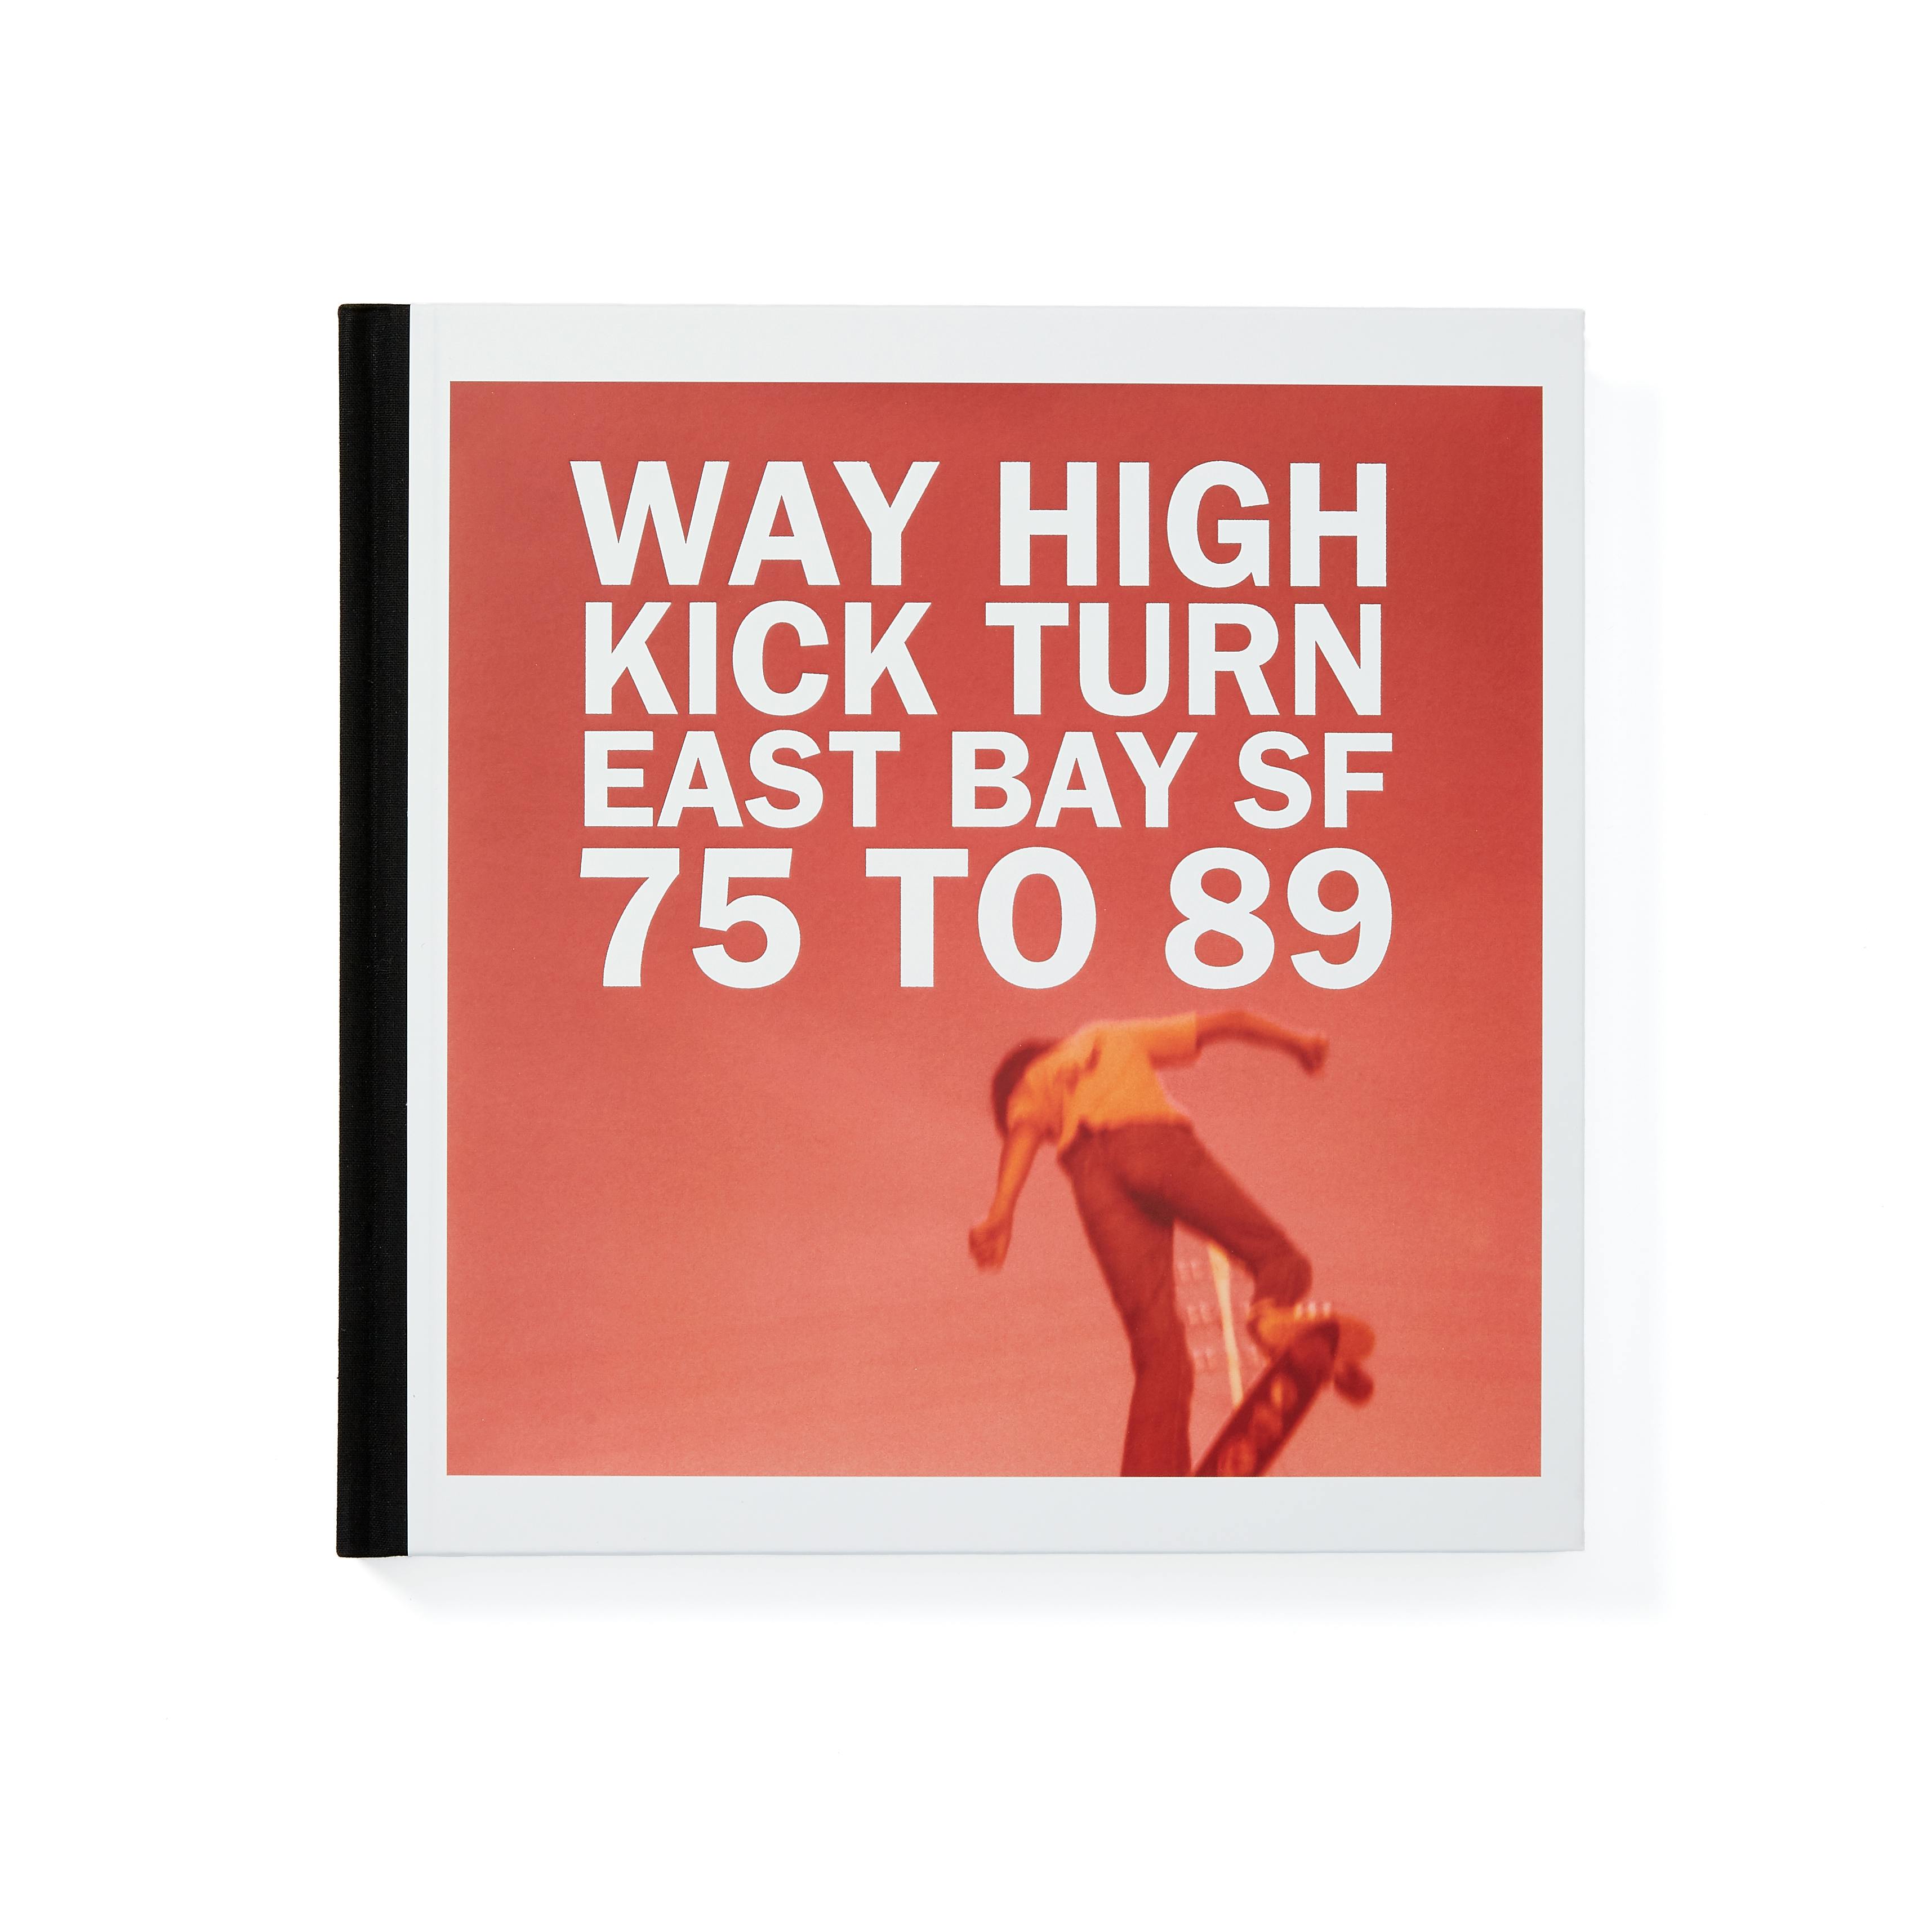 Way High Kick Turn East Bay SF 75 to 89